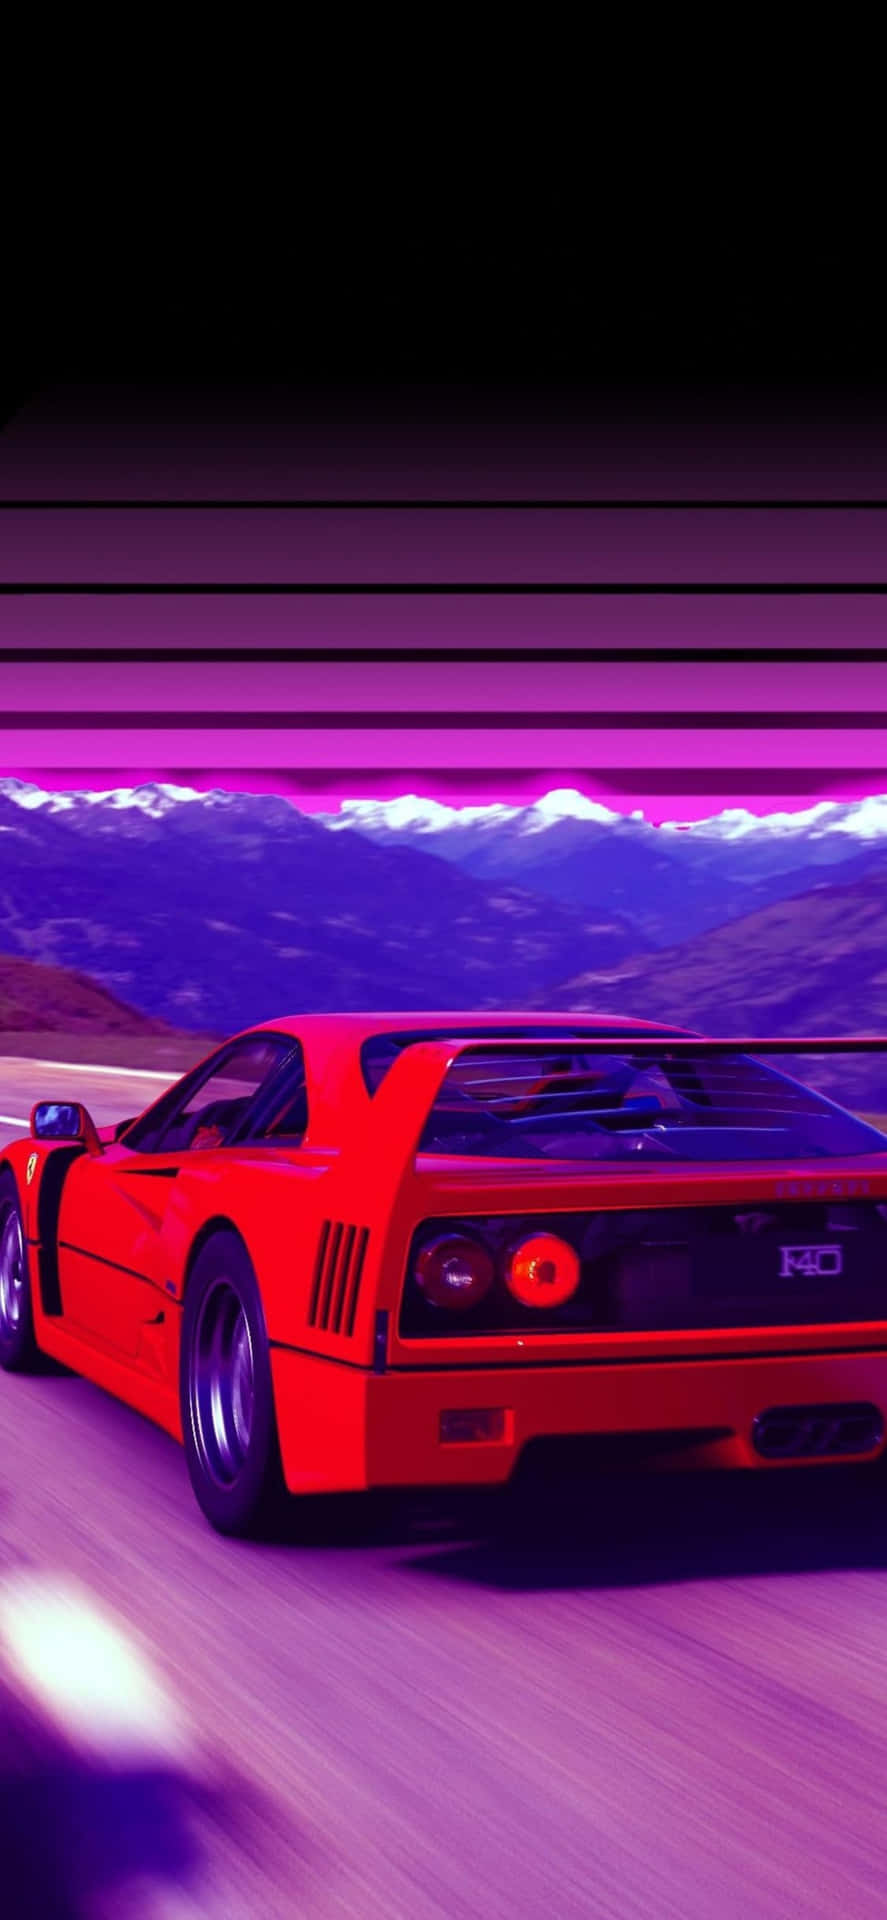 Iphone Xs Max Ferrari Background Red Ferrari F40 Purple Backdrop